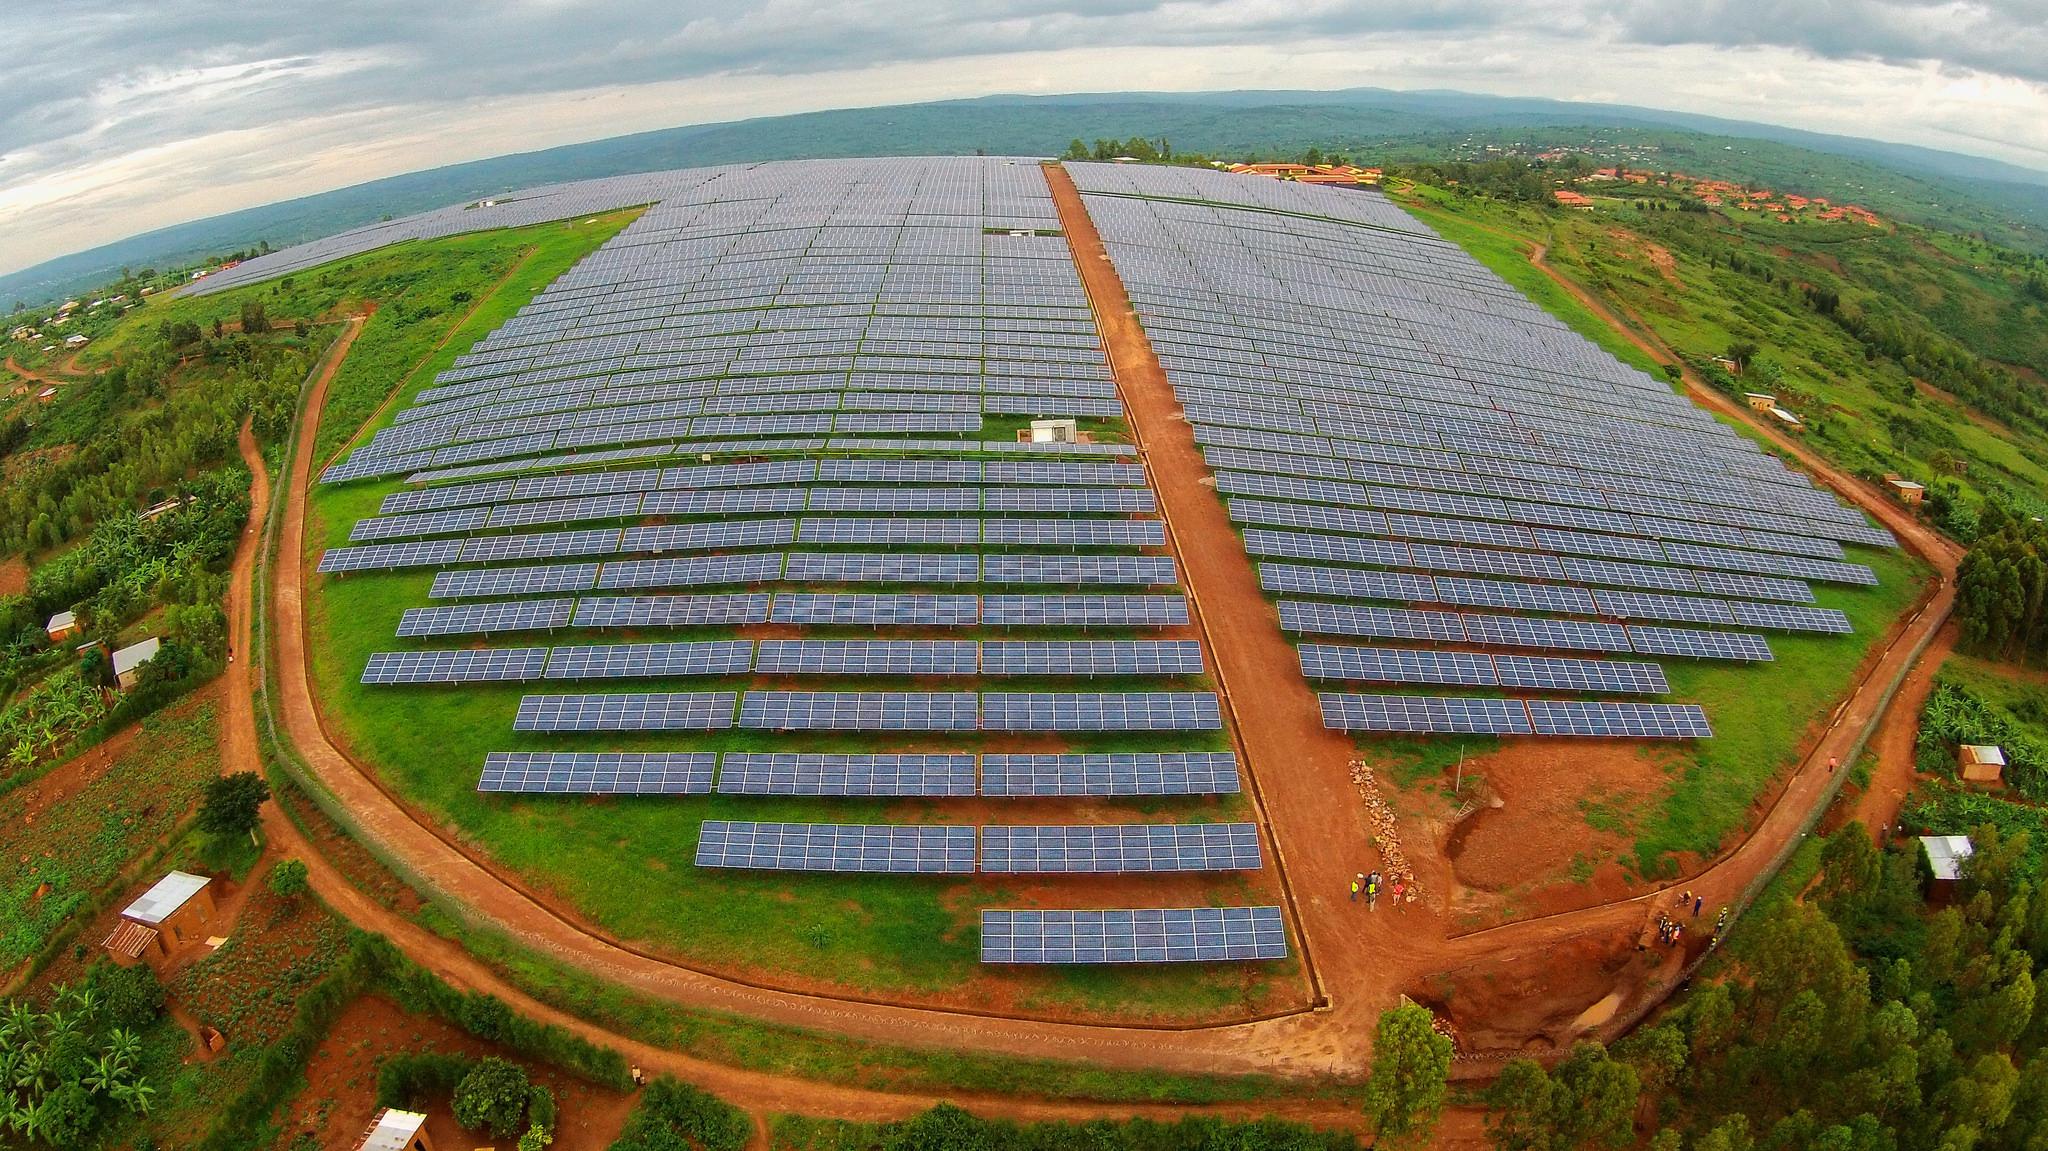 A solar field in Rwanda. Credit: Sameer Halai.